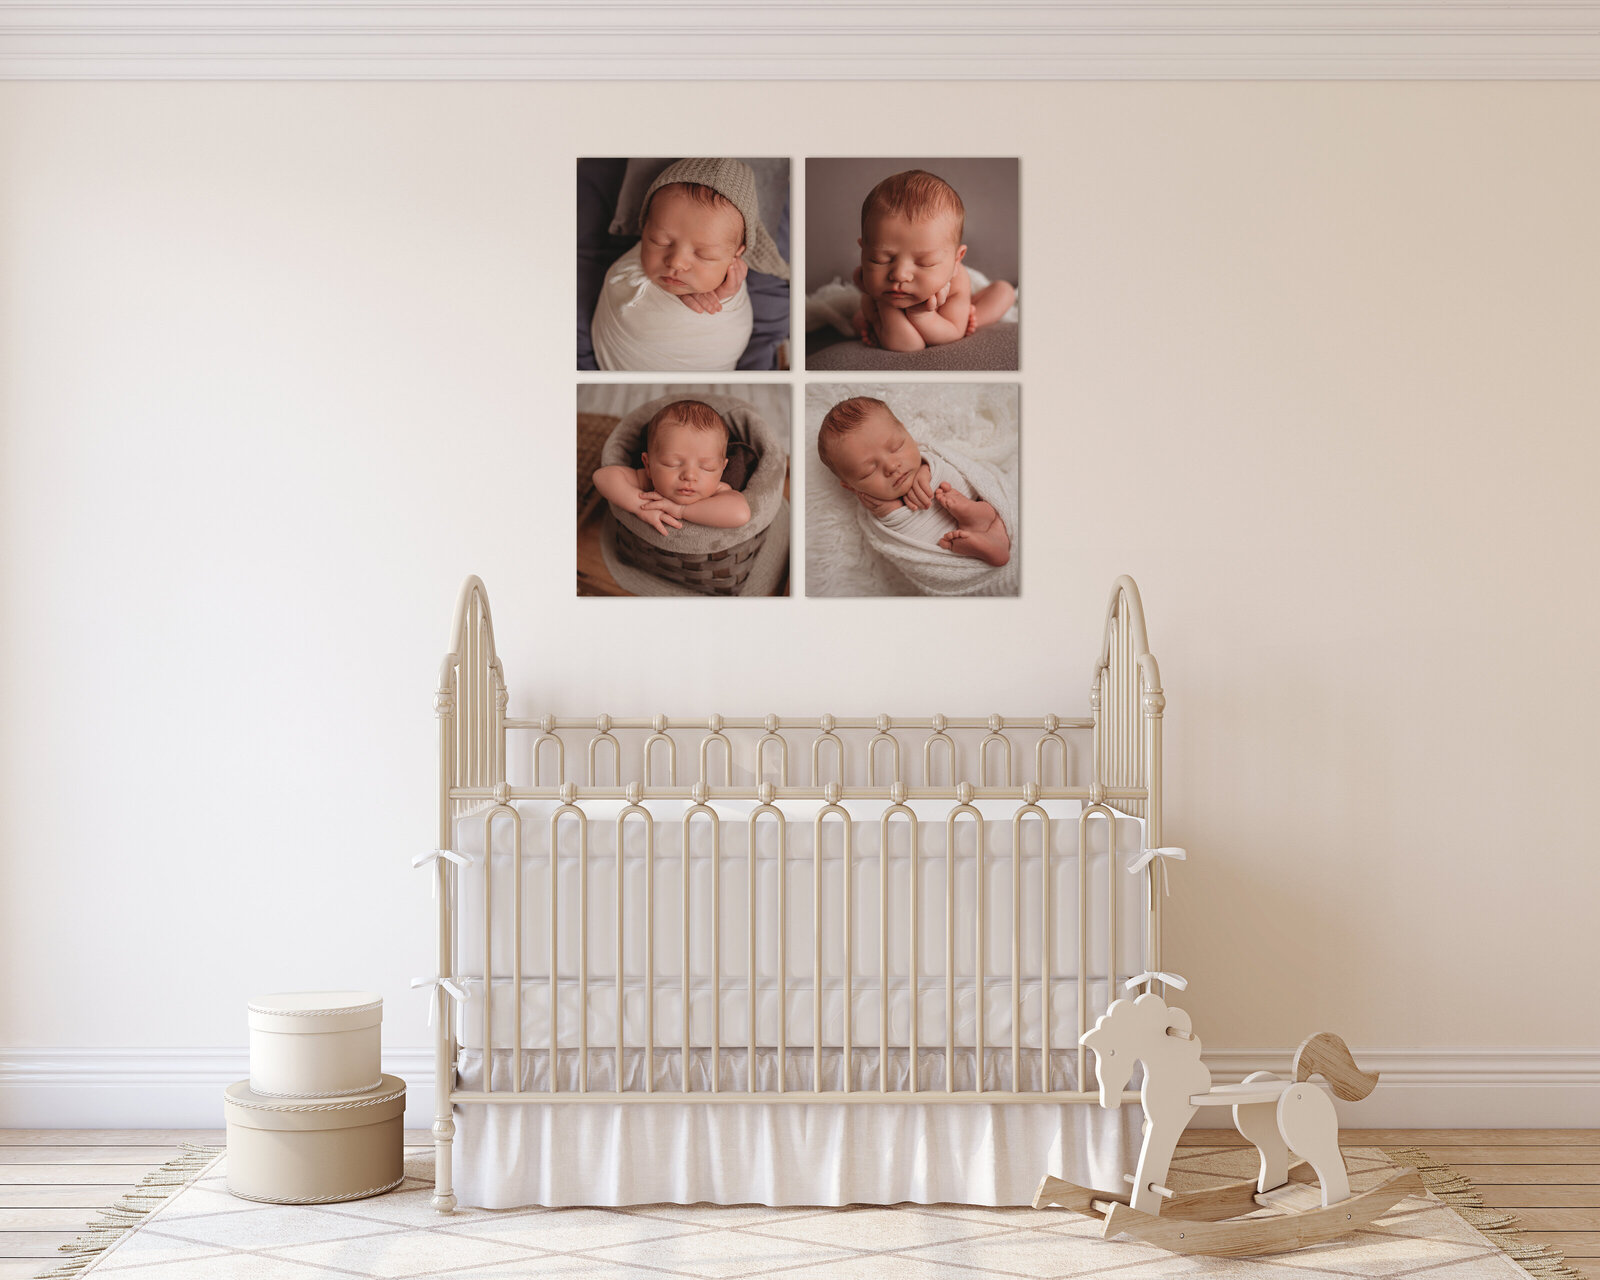 Newborn portrait session wall art hanging in nursery above crib. Four 20x20 portraits.